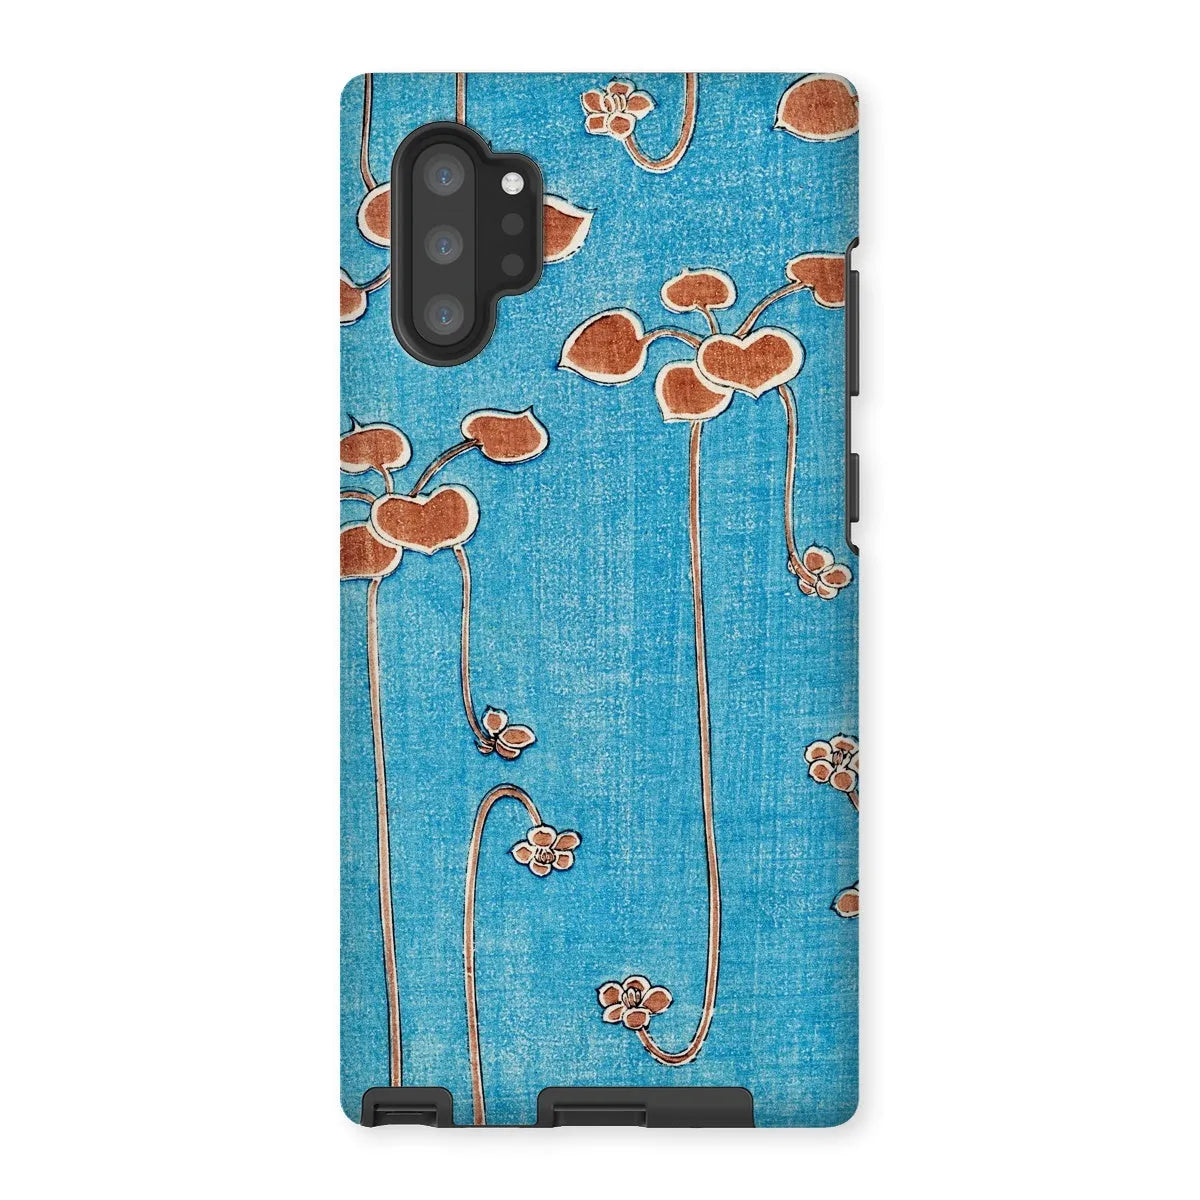 Vines - Japanese Nihonga Art Phone Case - Watanabe Shōtei - Samsung Galaxy Note 10p / Matte - Mobile Phone Cases